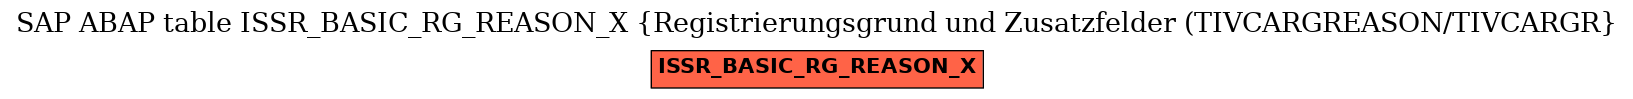 E-R Diagram for table ISSR_BASIC_RG_REASON_X (Registrierungsgrund und Zusatzfelder (TIVCARGREASON/TIVCARGR)